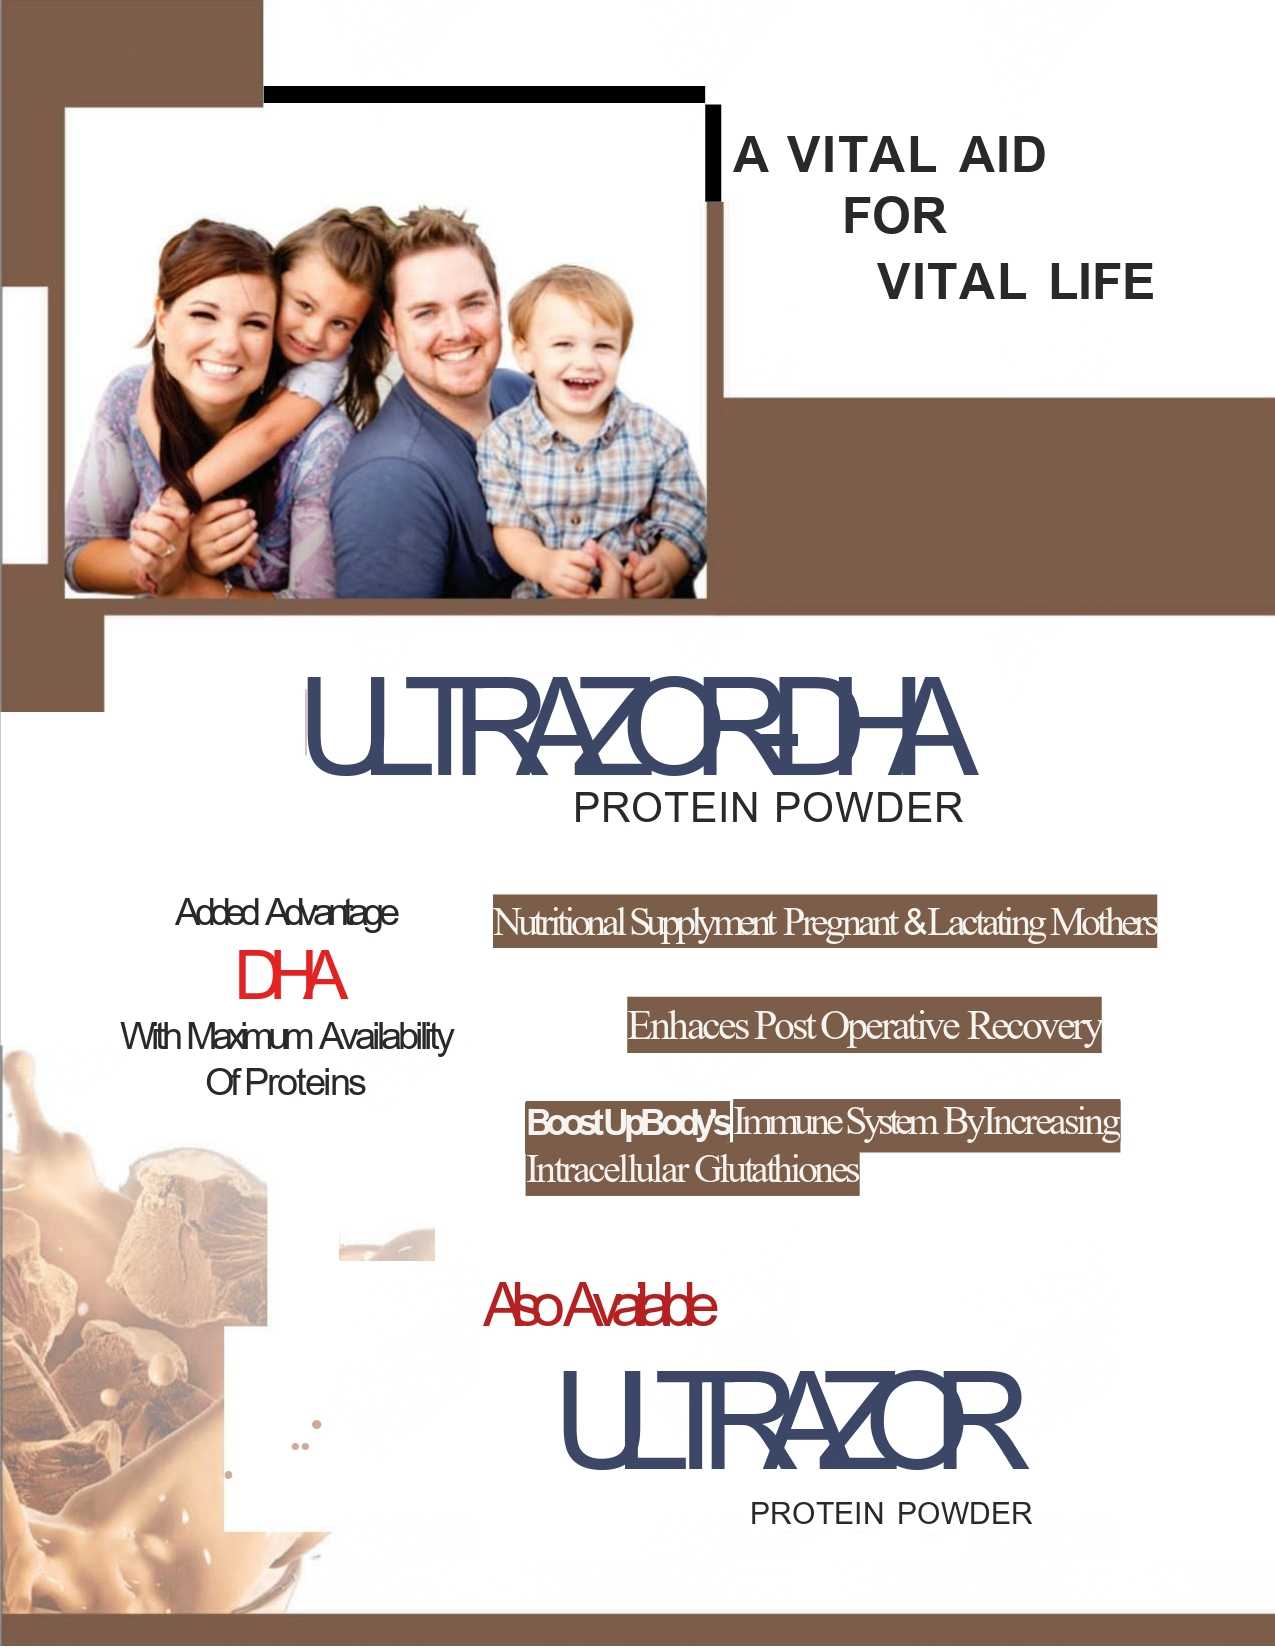 Ultrazor-DHA